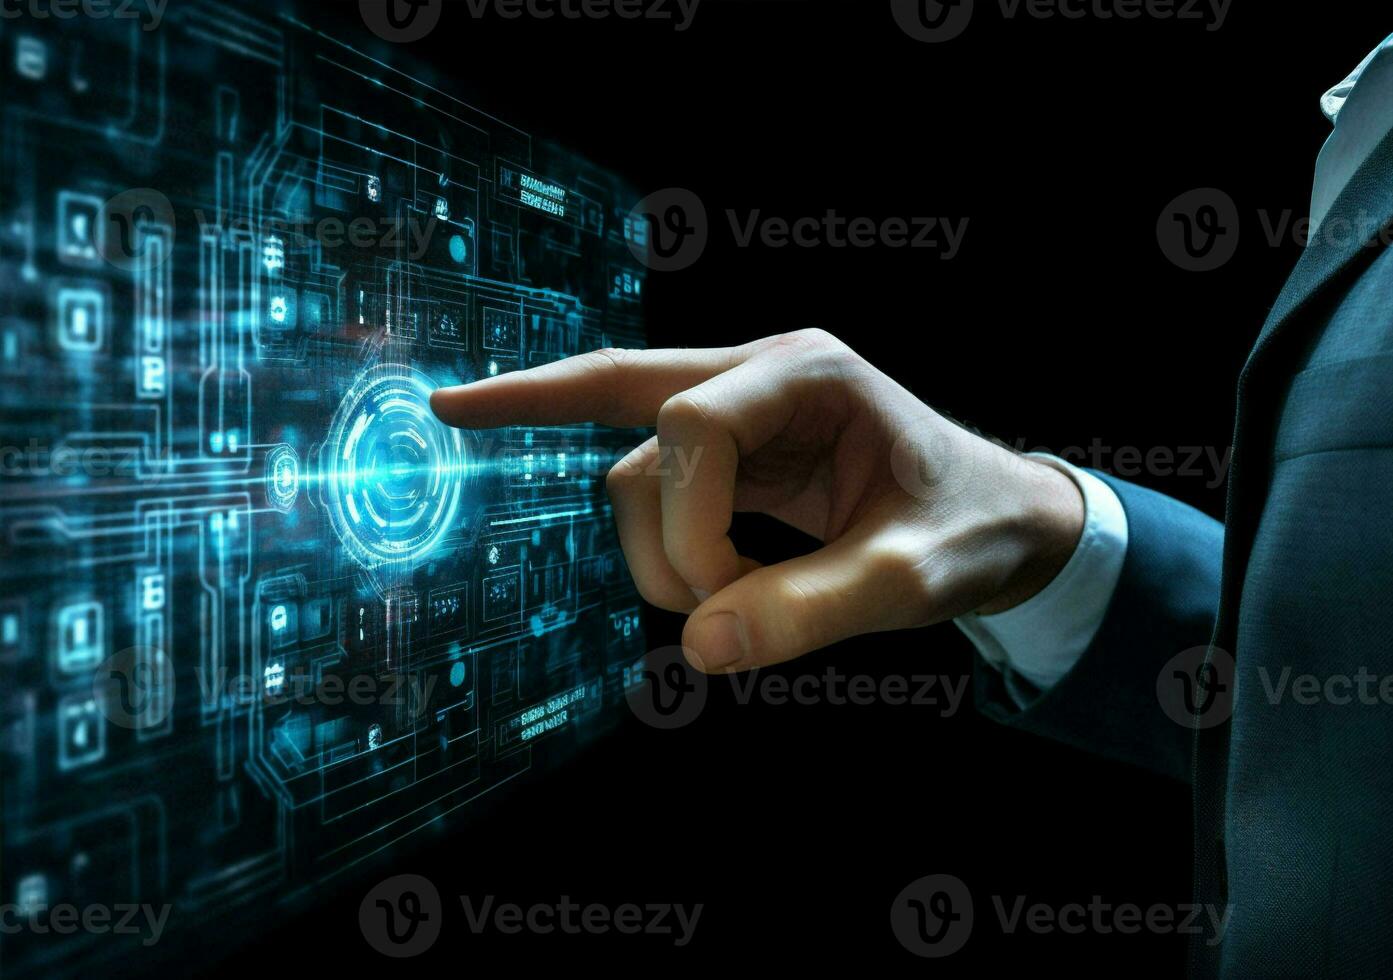 Businessman tech business screen interface virtual concept technology innovation digital future control hand information photo